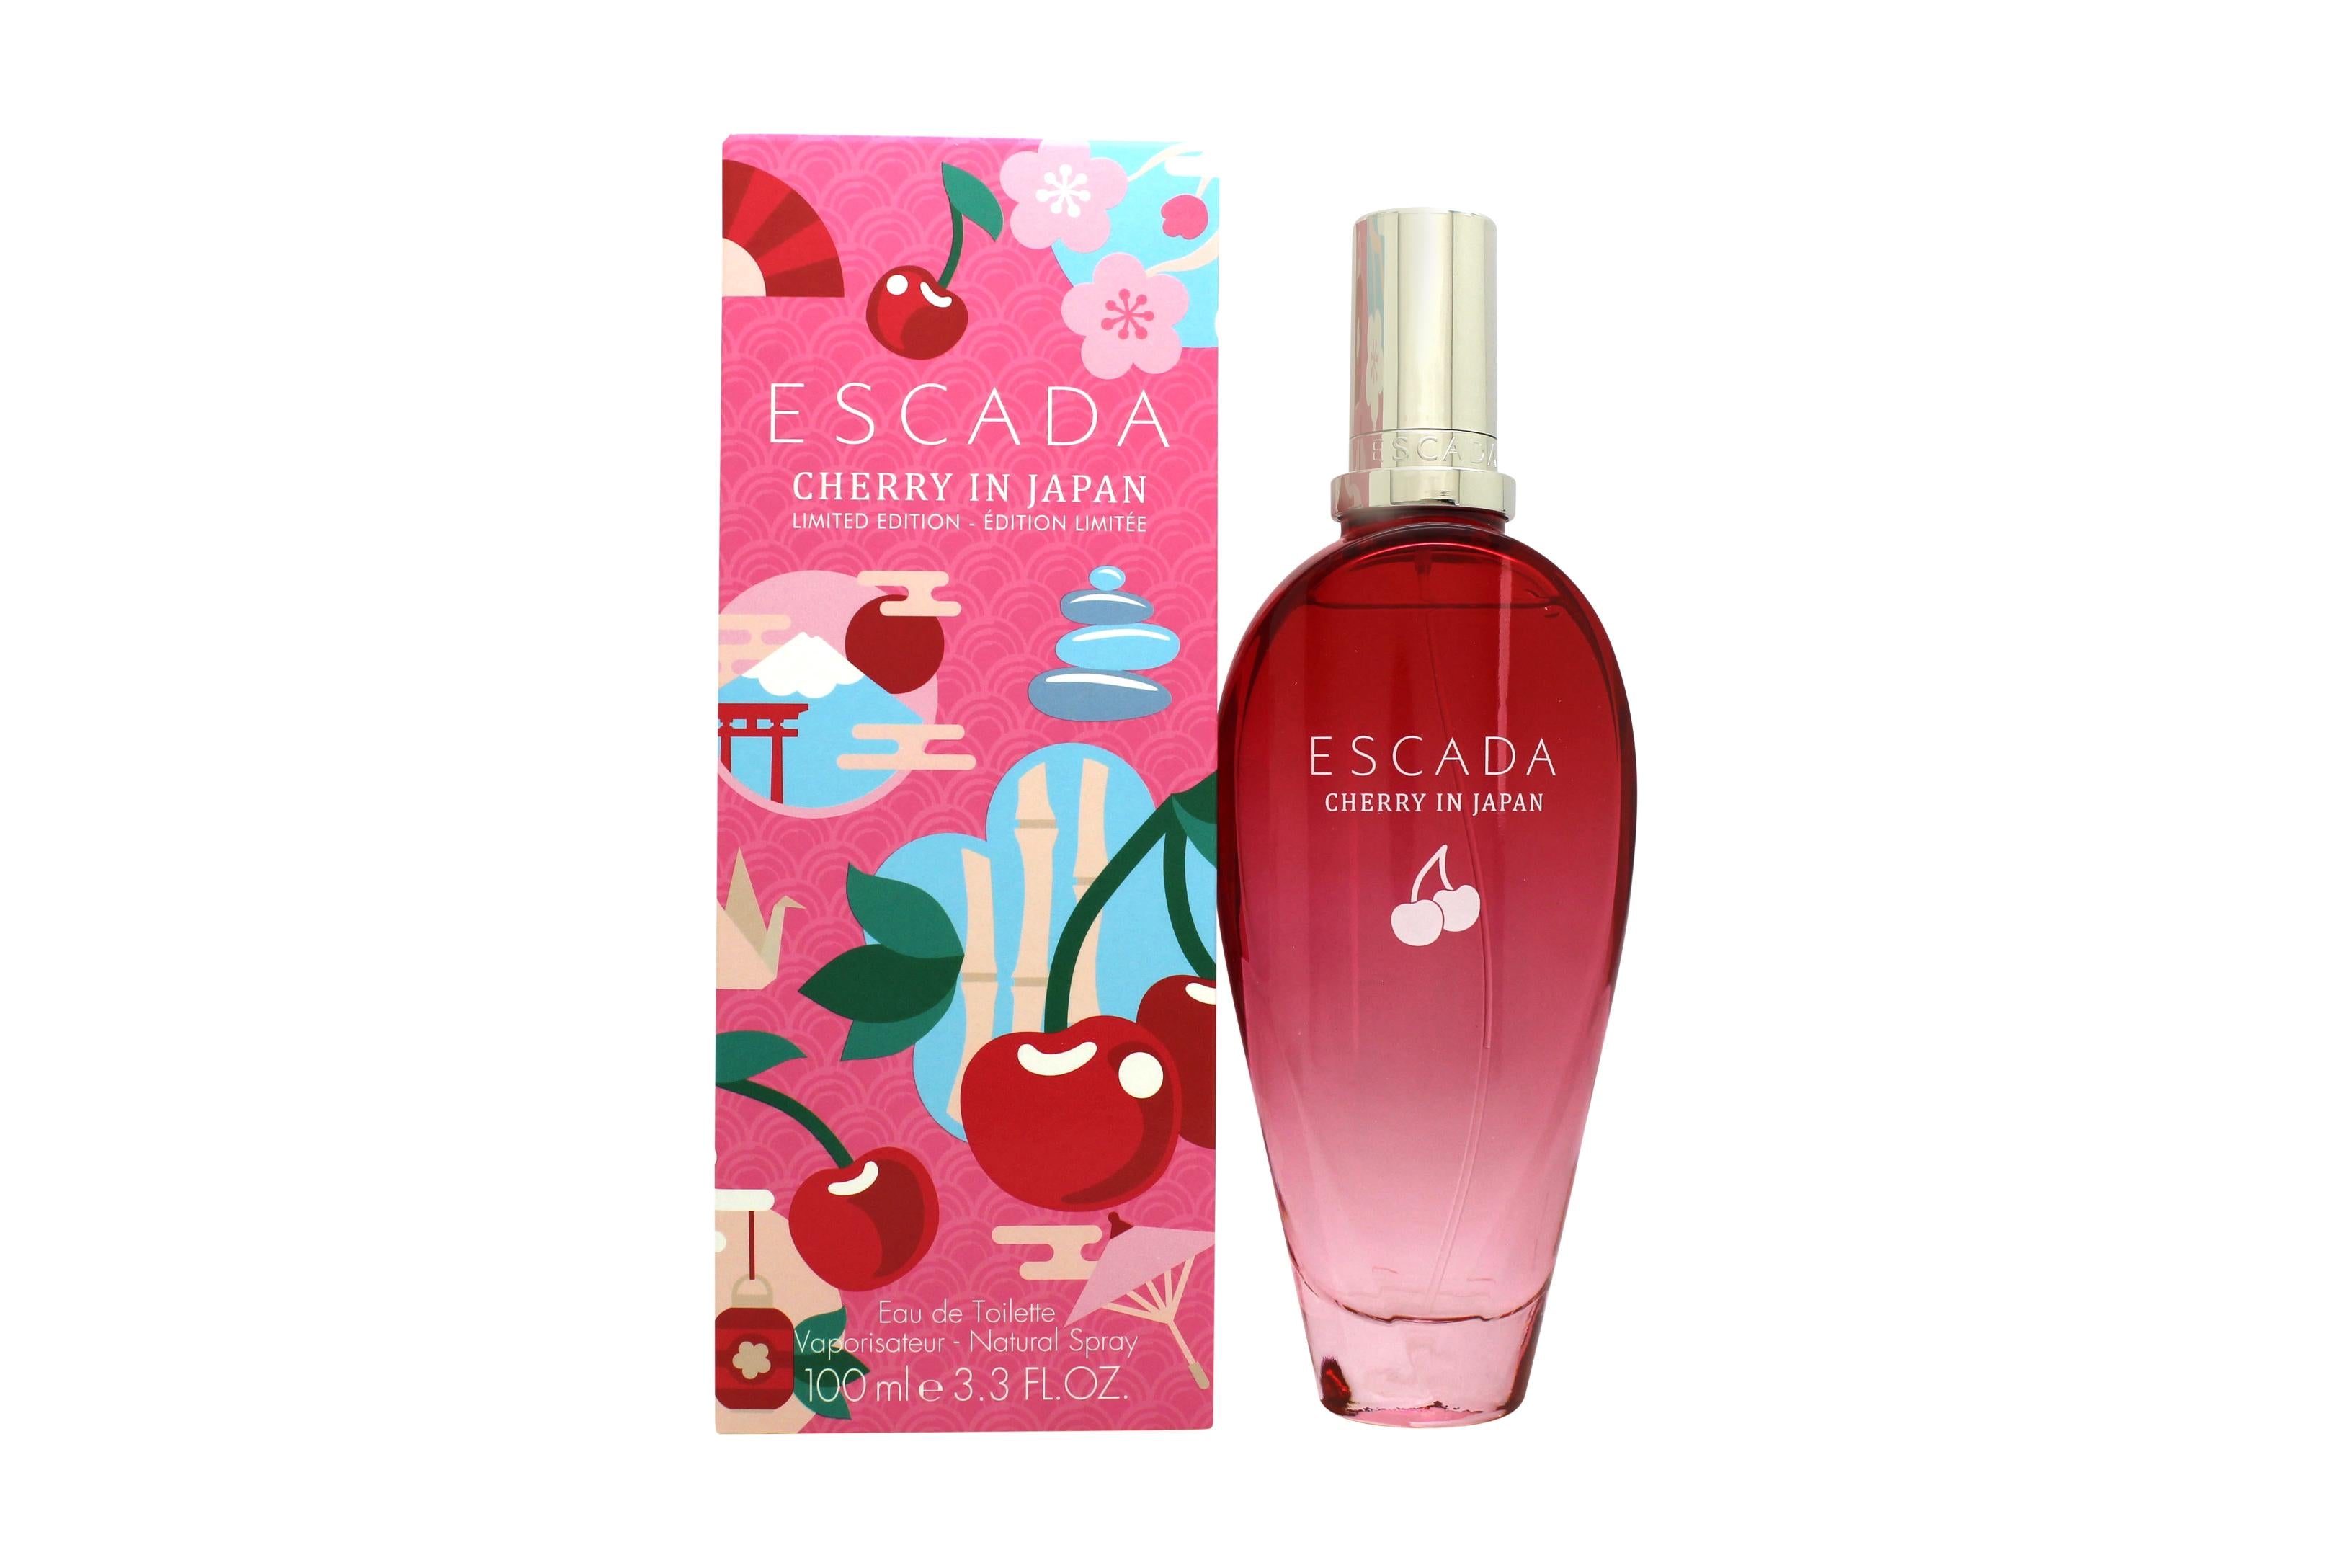 View Escada Cherry In Japan Eau de Toilette 100ml Spray Limited Edition information